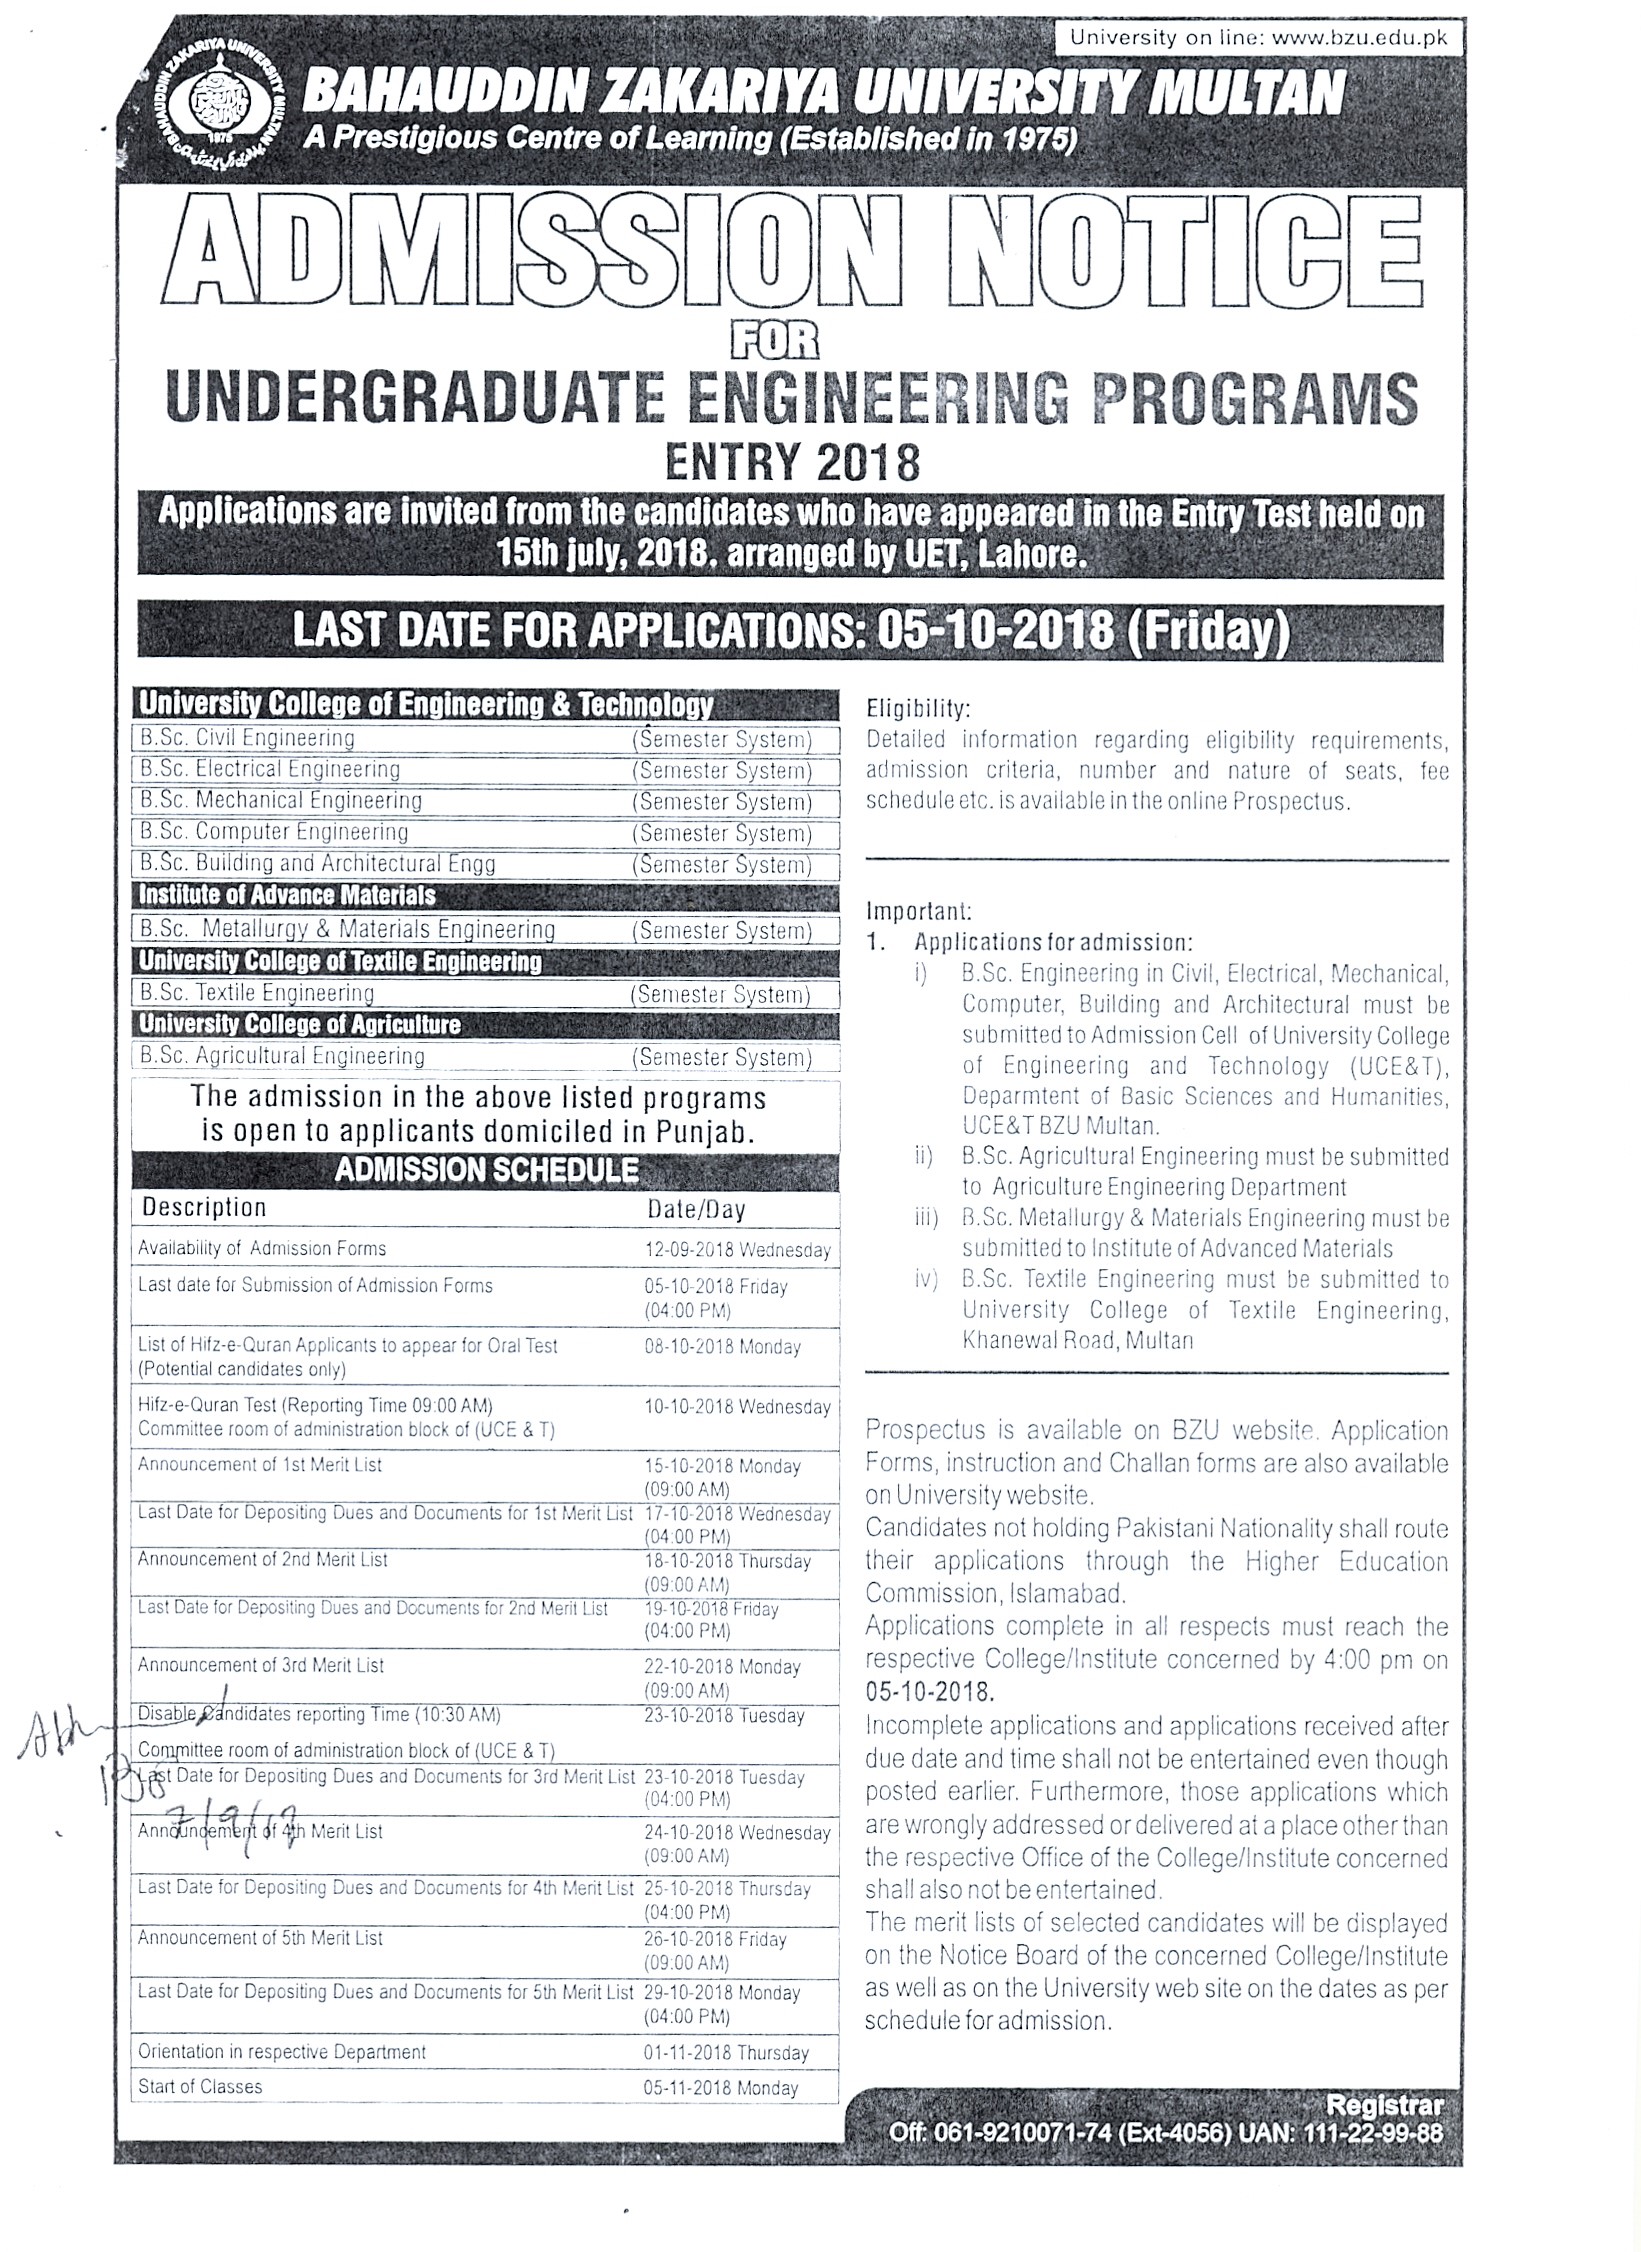 BZU Multan Admission Notice for UG Engineering Programs 2018